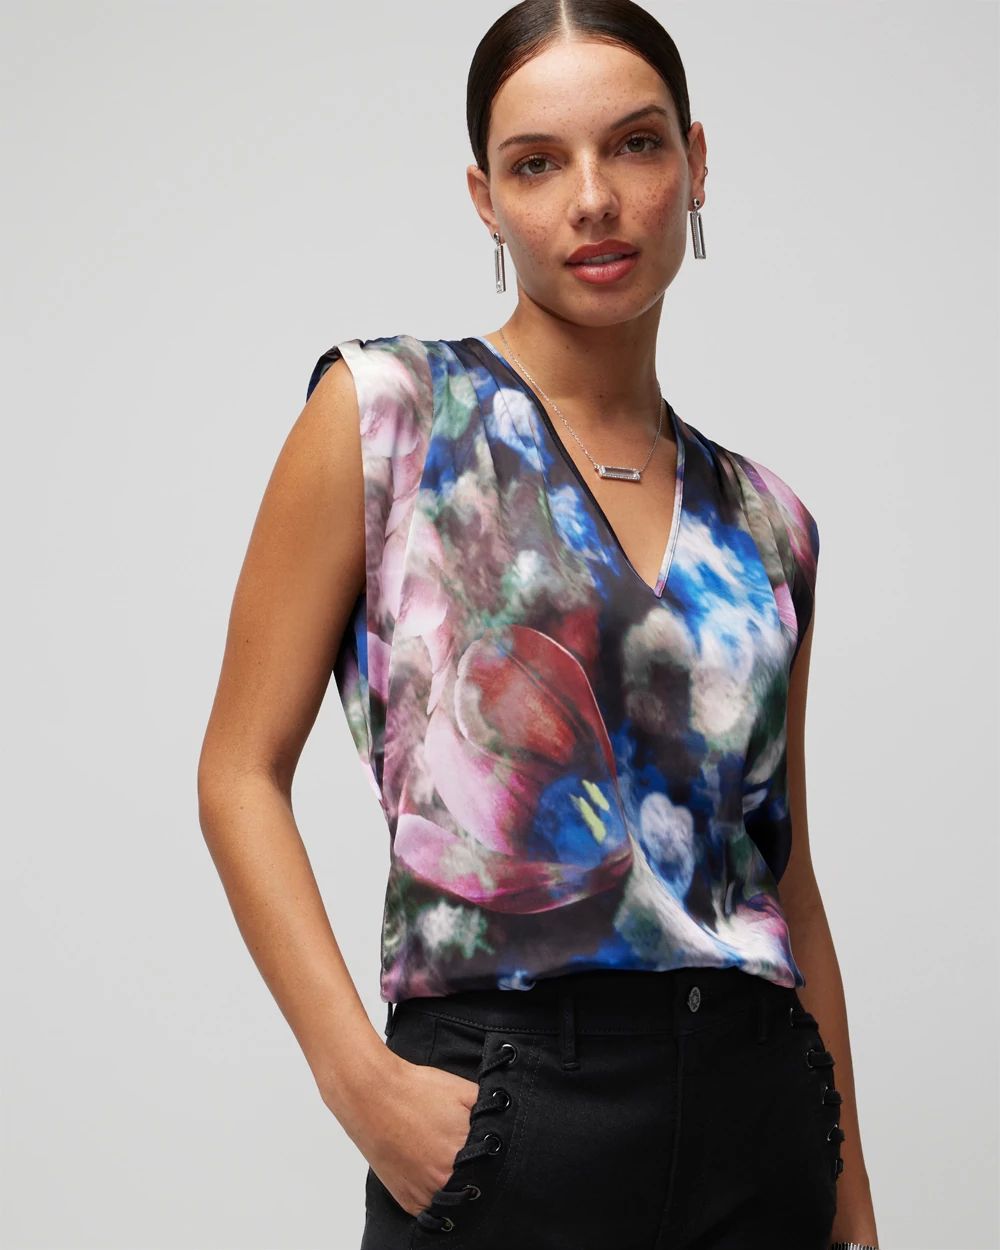 2DXuixsh Beaded Women Print Top Shirt Tee Sleeveless Round Neck